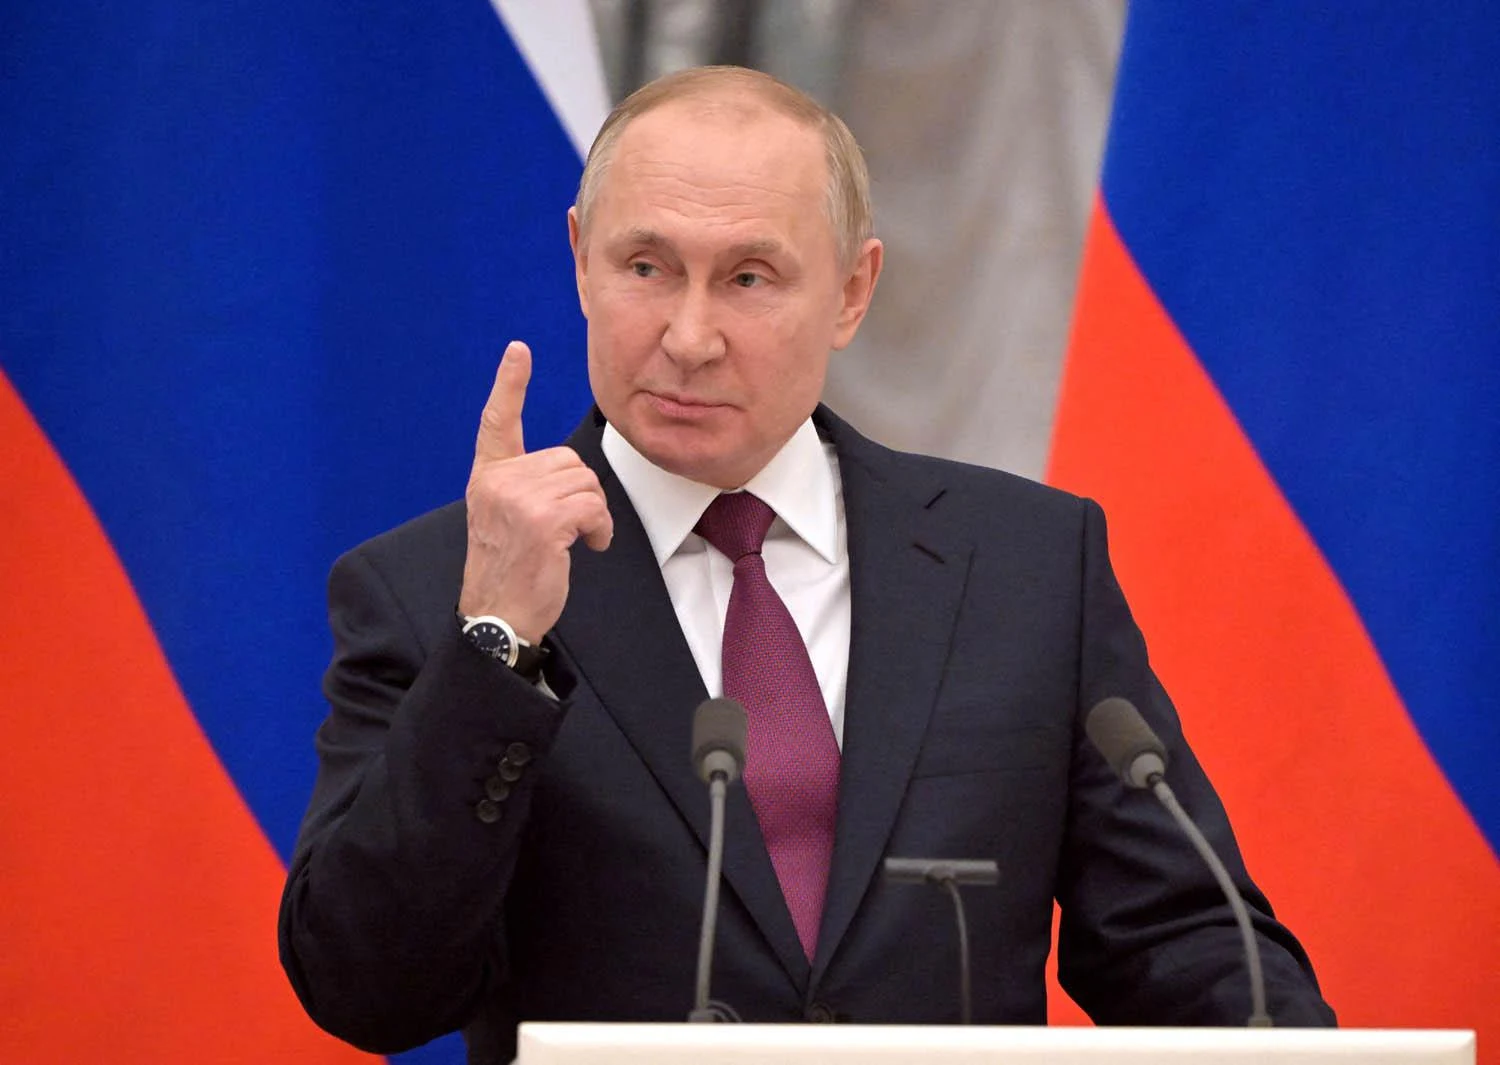 بوتين رئيس روسيا والحرب بين روسيا وأوكرانيا